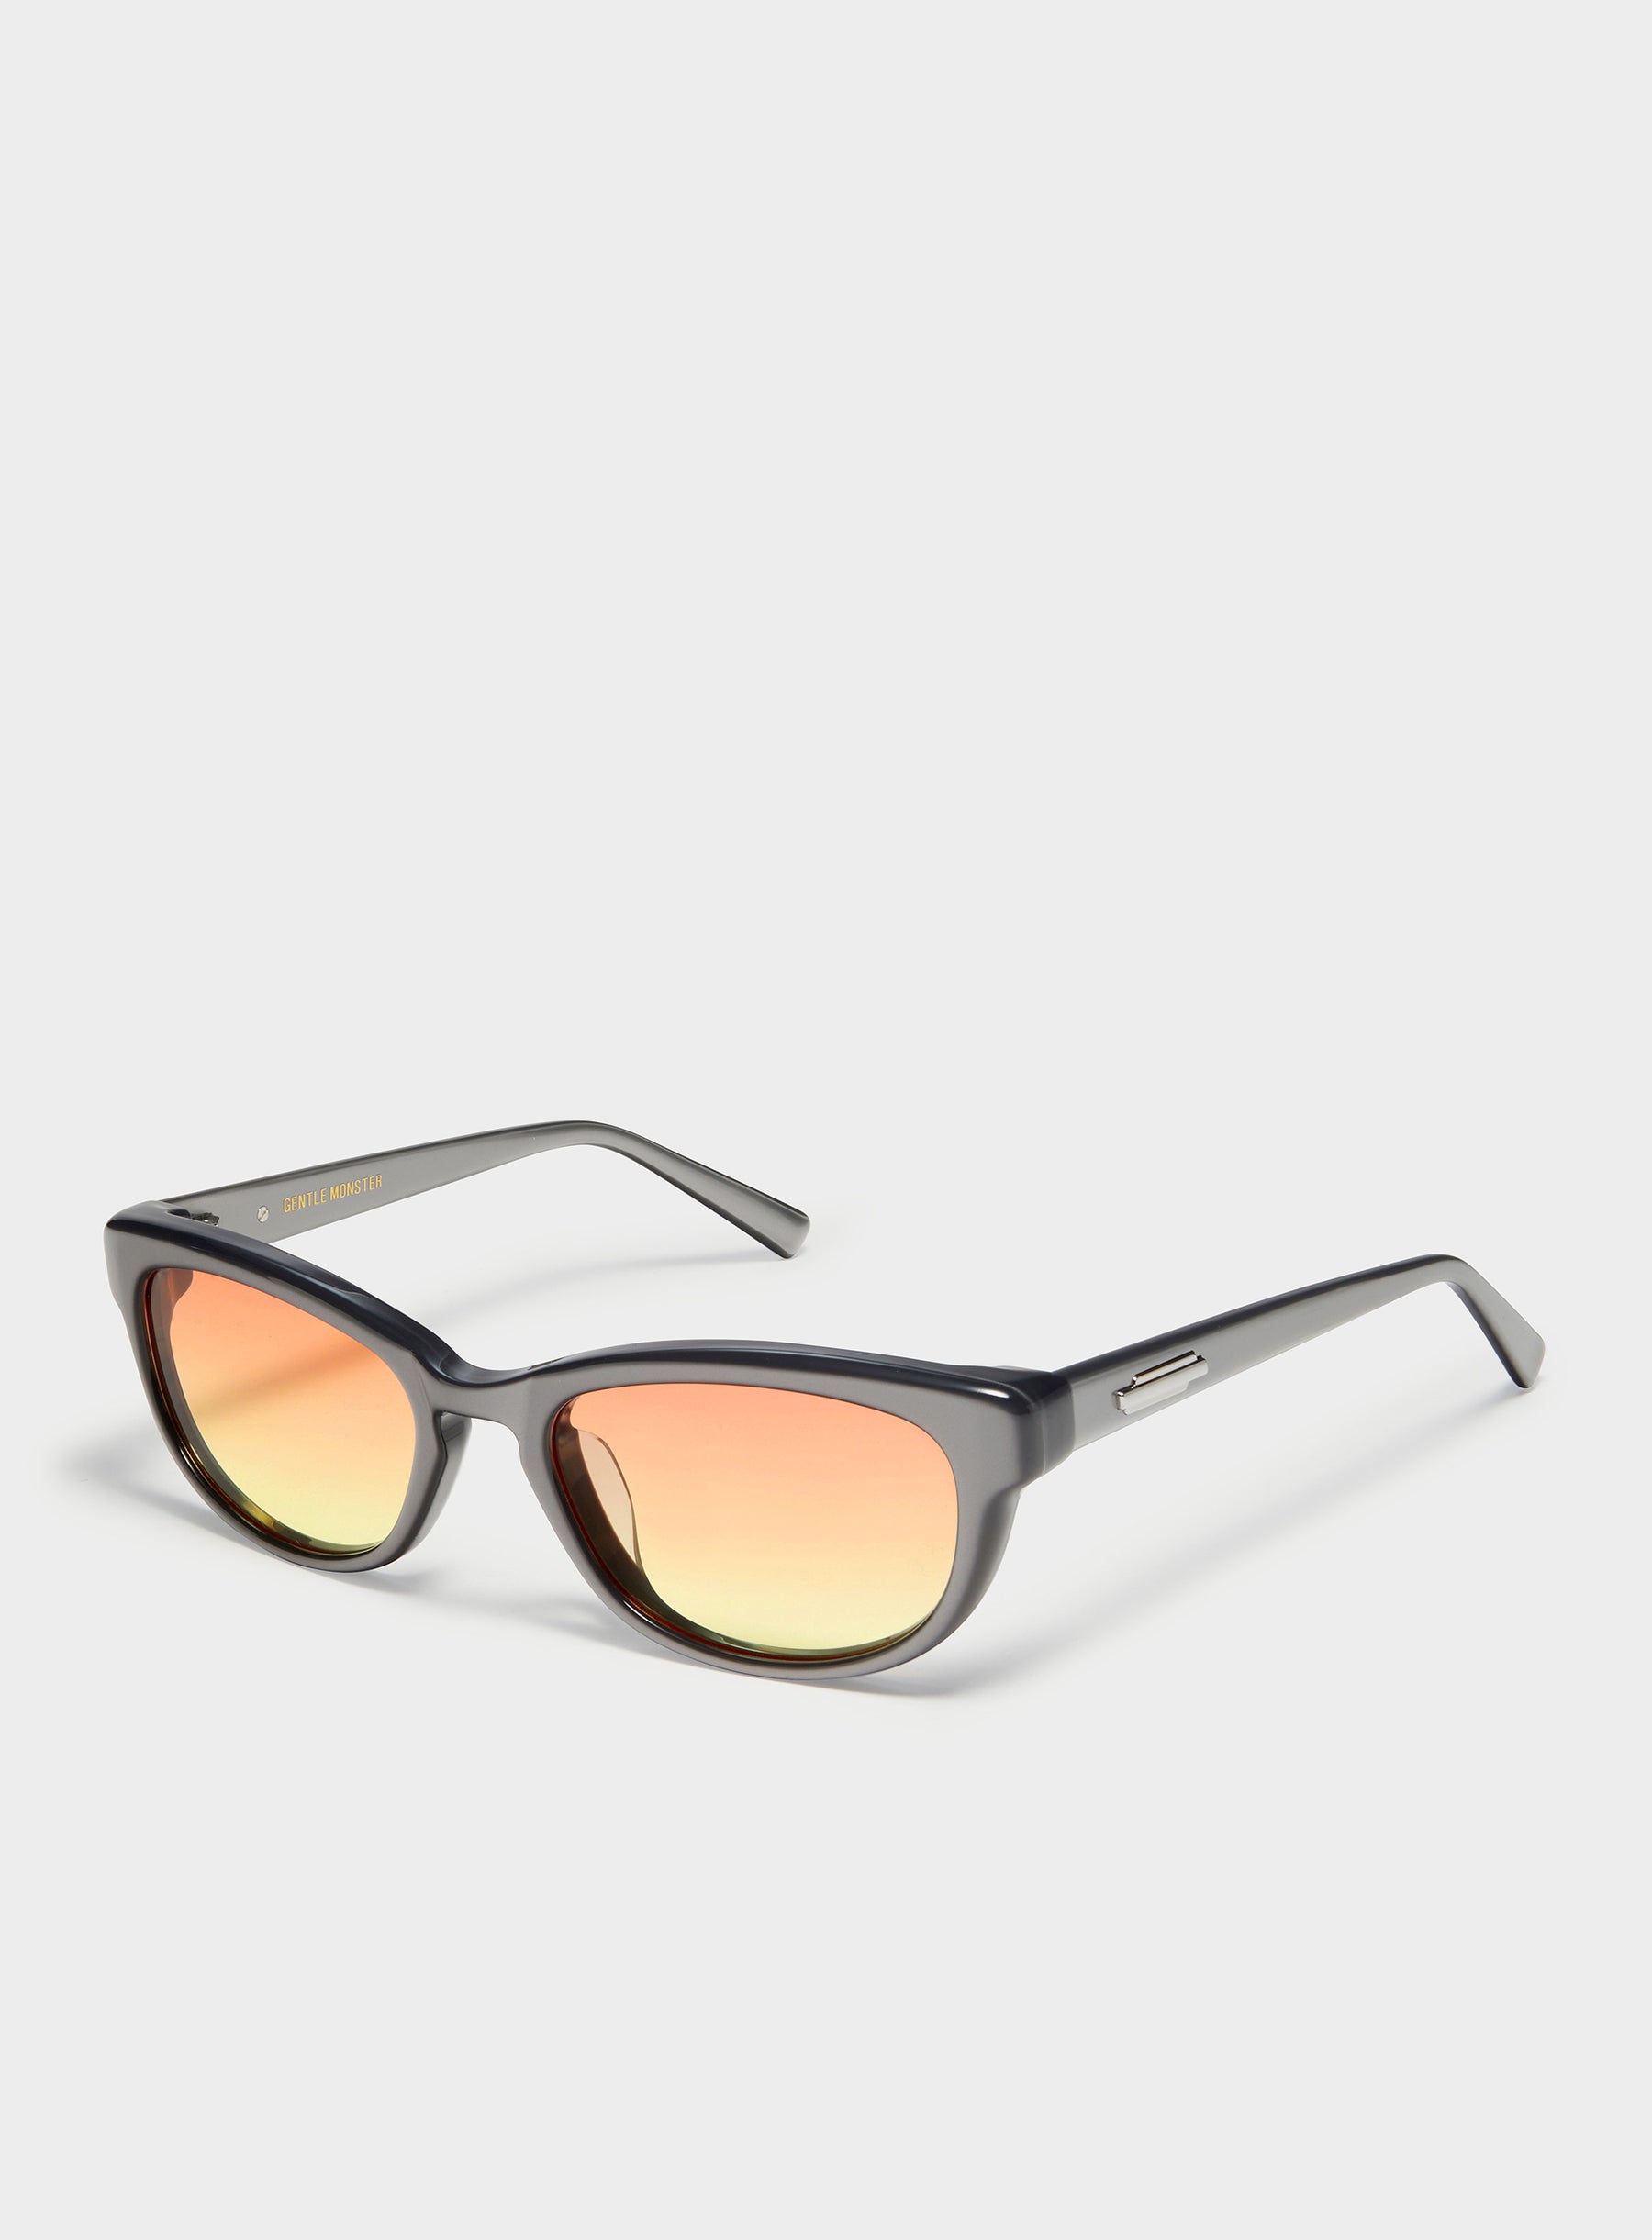 Reny G4 Sunglasses